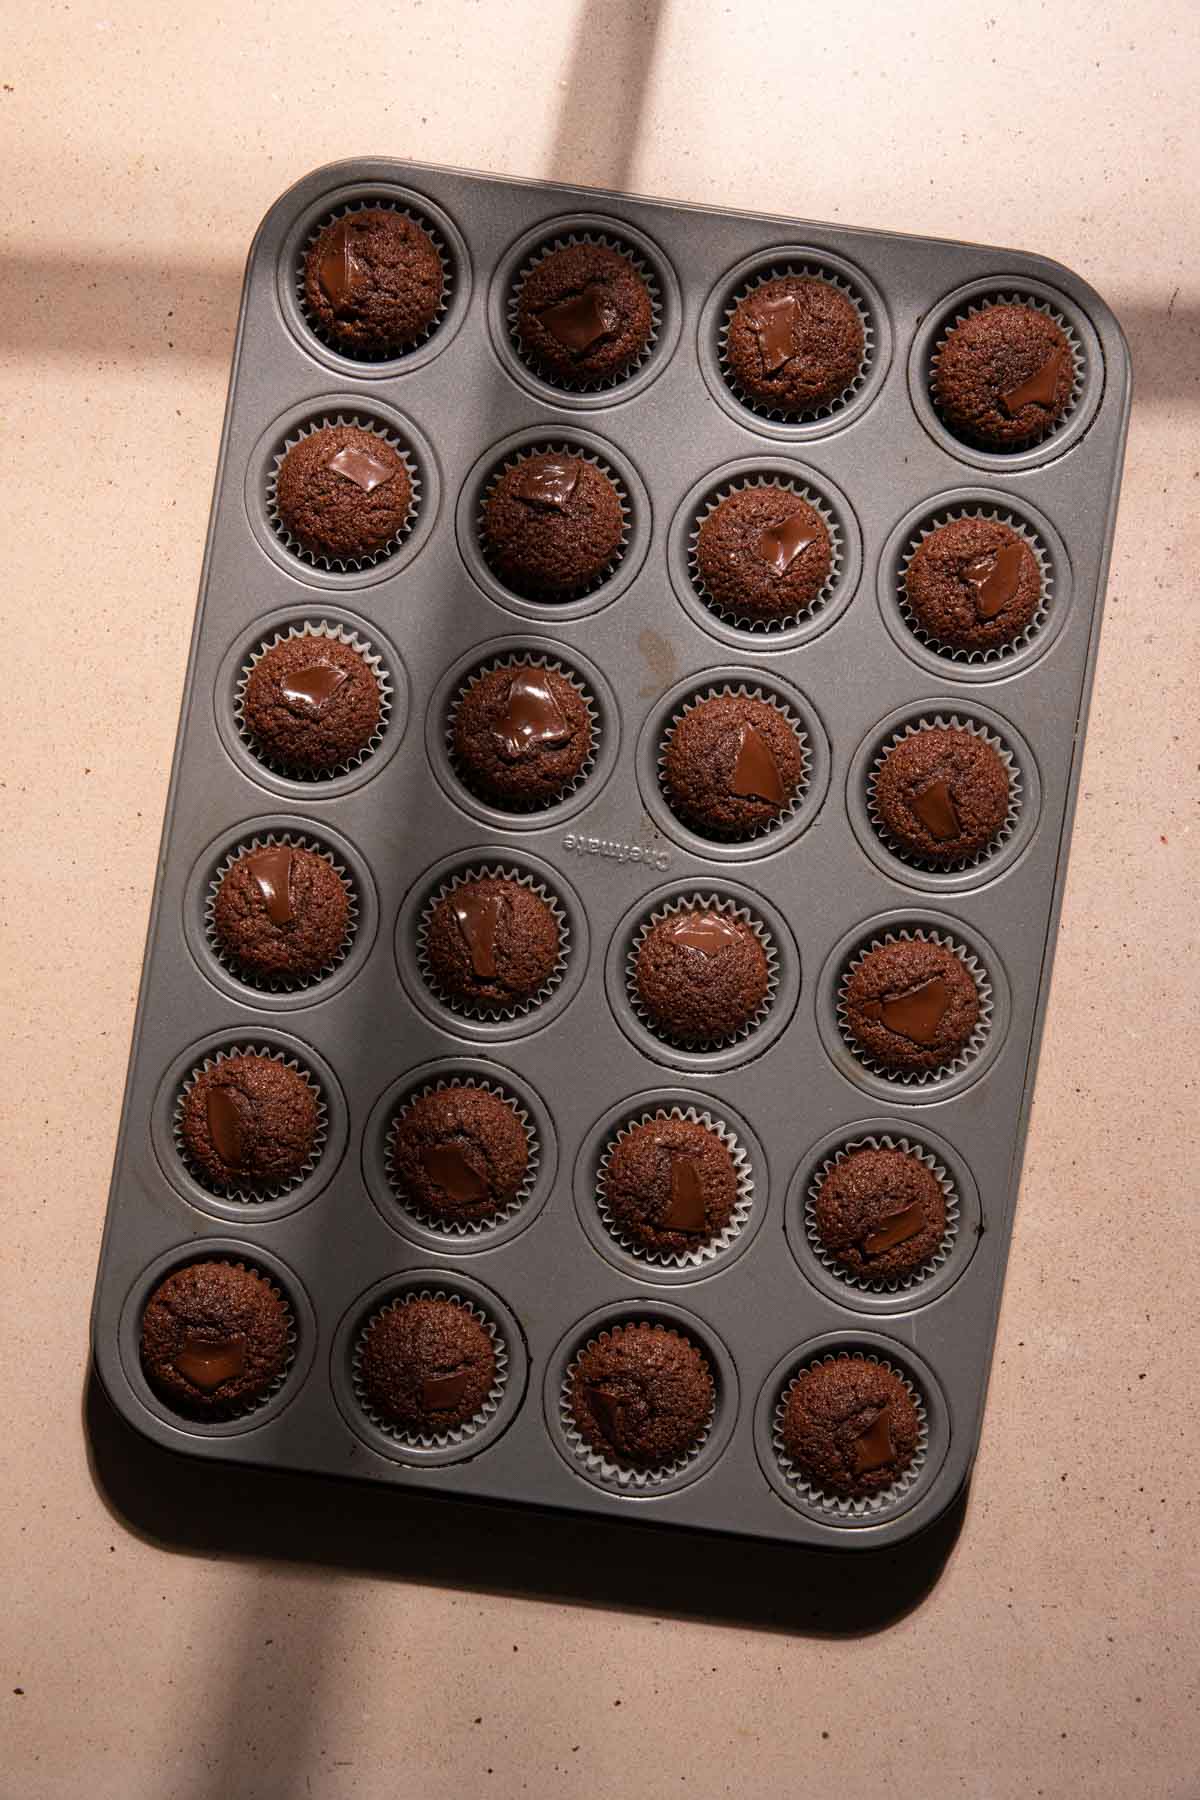 baked chocolate financiers in a cupcake pan